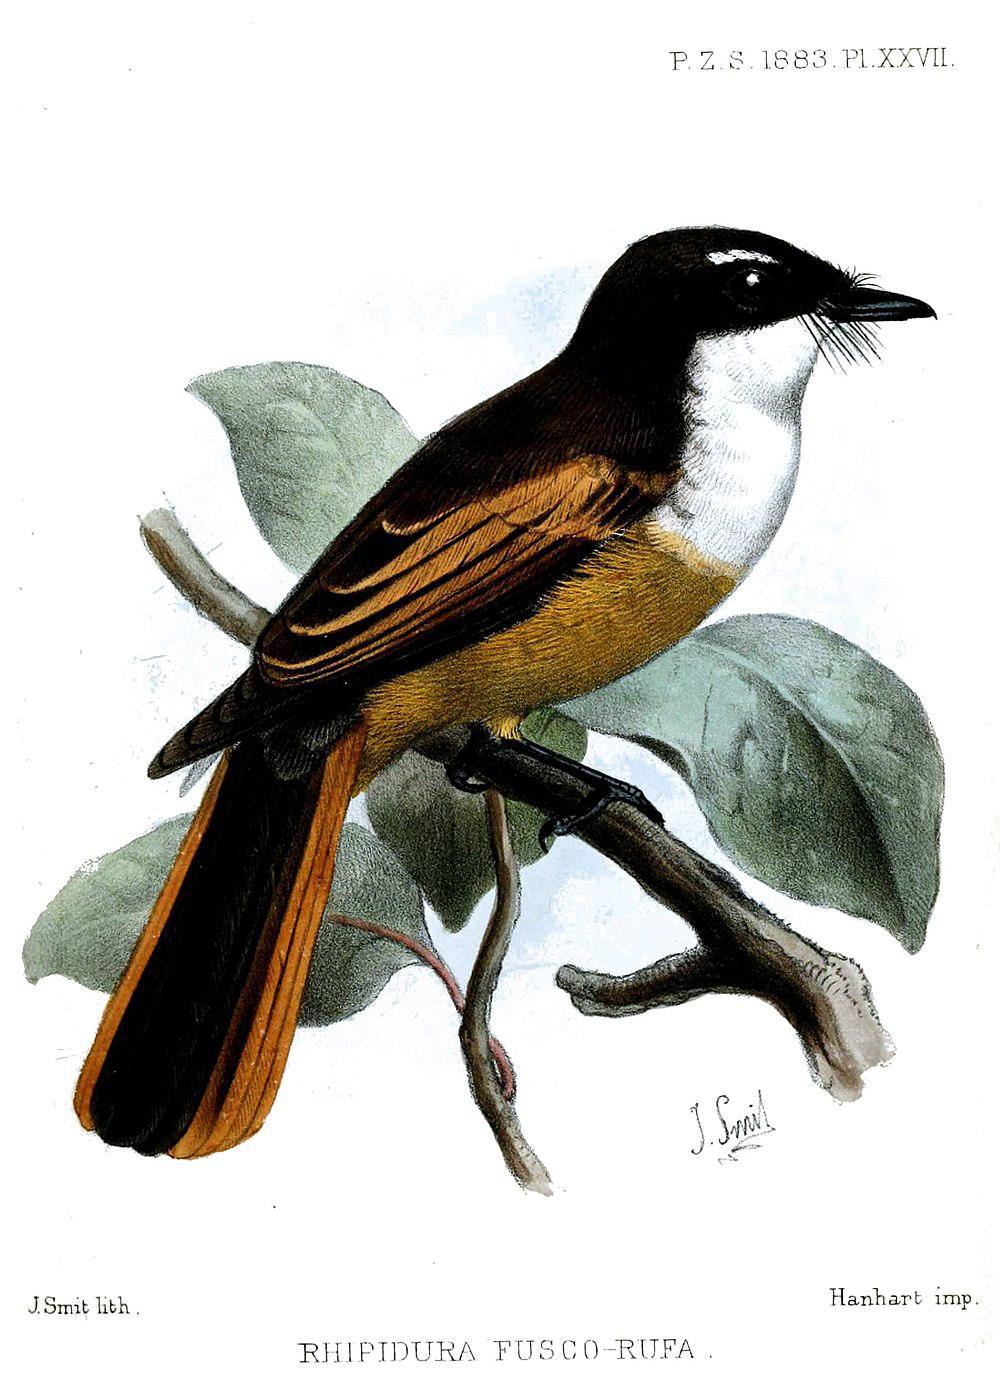 栗尾扇尾鹟 / Cinnamon-tailed Fantail / Rhipidura fuscorufa